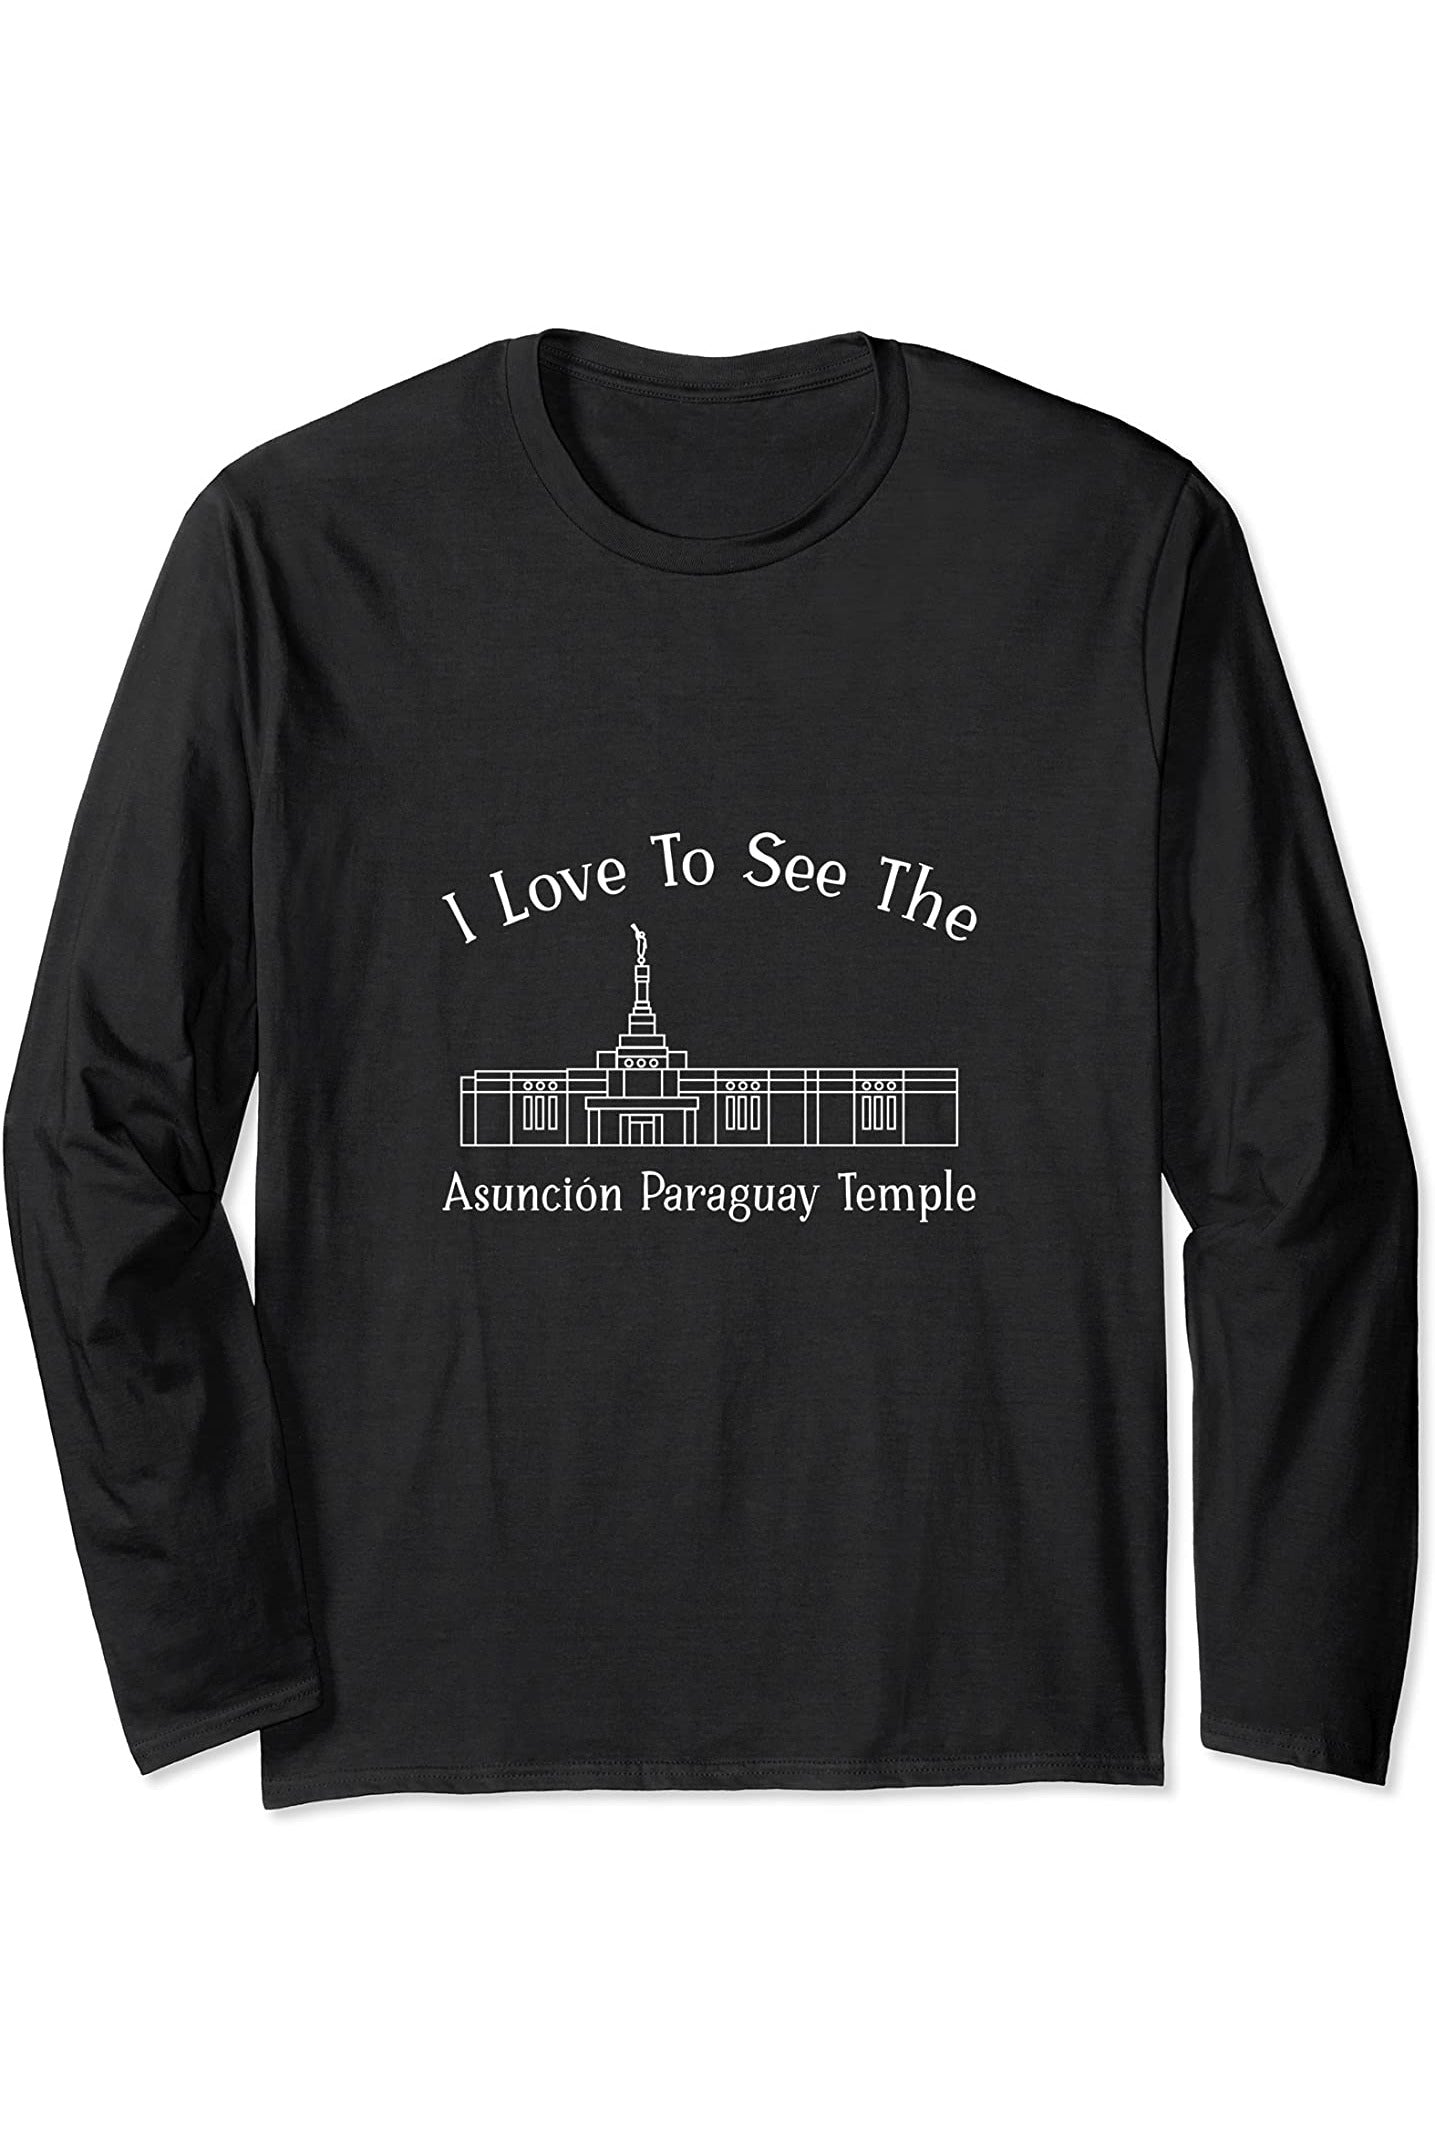 Asuncion Paraguay Temple Long Sleeve T-Shirt - Happy Style (English) US